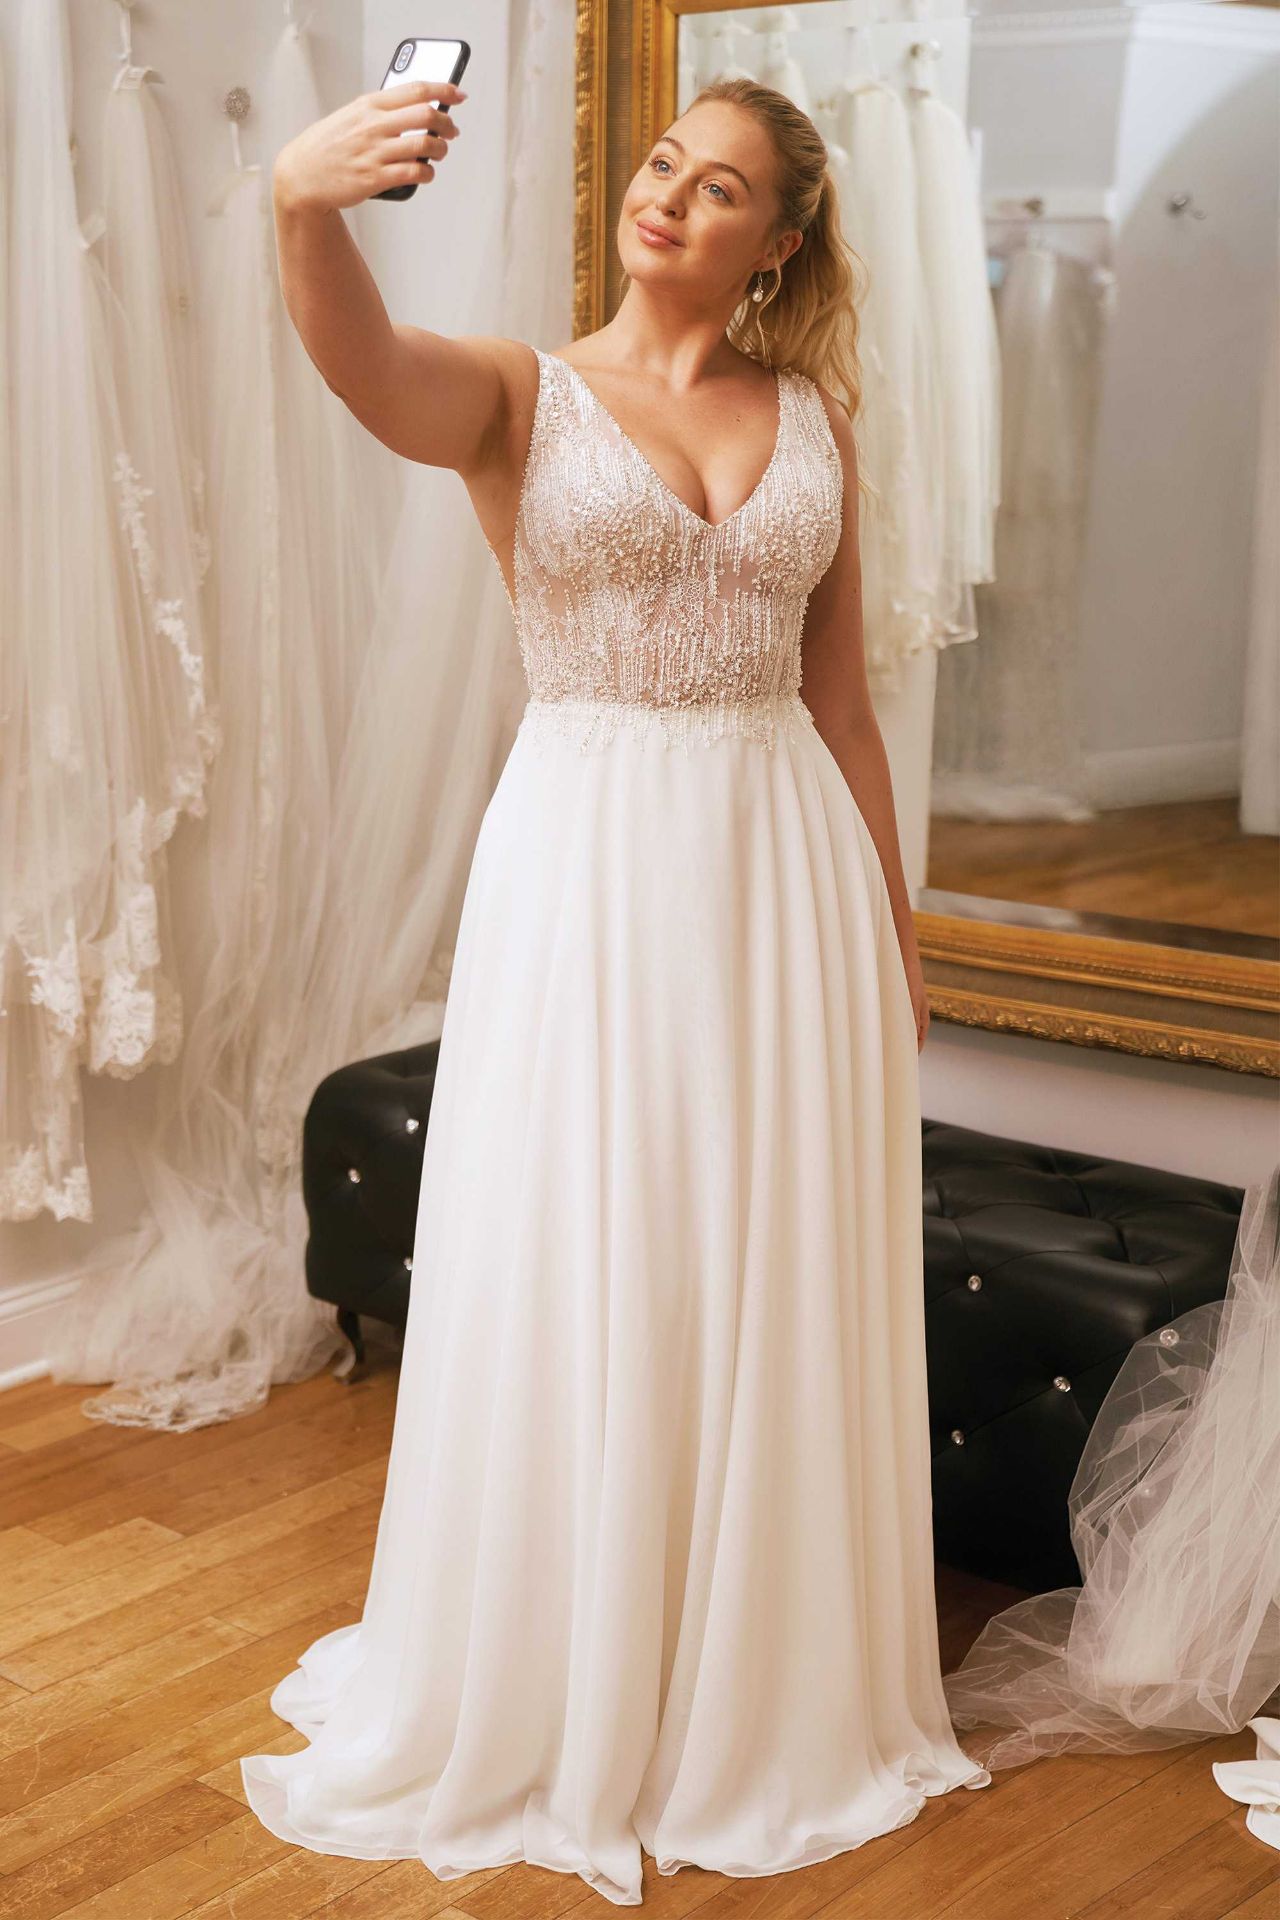 1 x Justin Alexander Designer Wedding Dress With Sheer Beaded Bodice - UK Size 10 - RRP £1,390 - Image 9 of 11